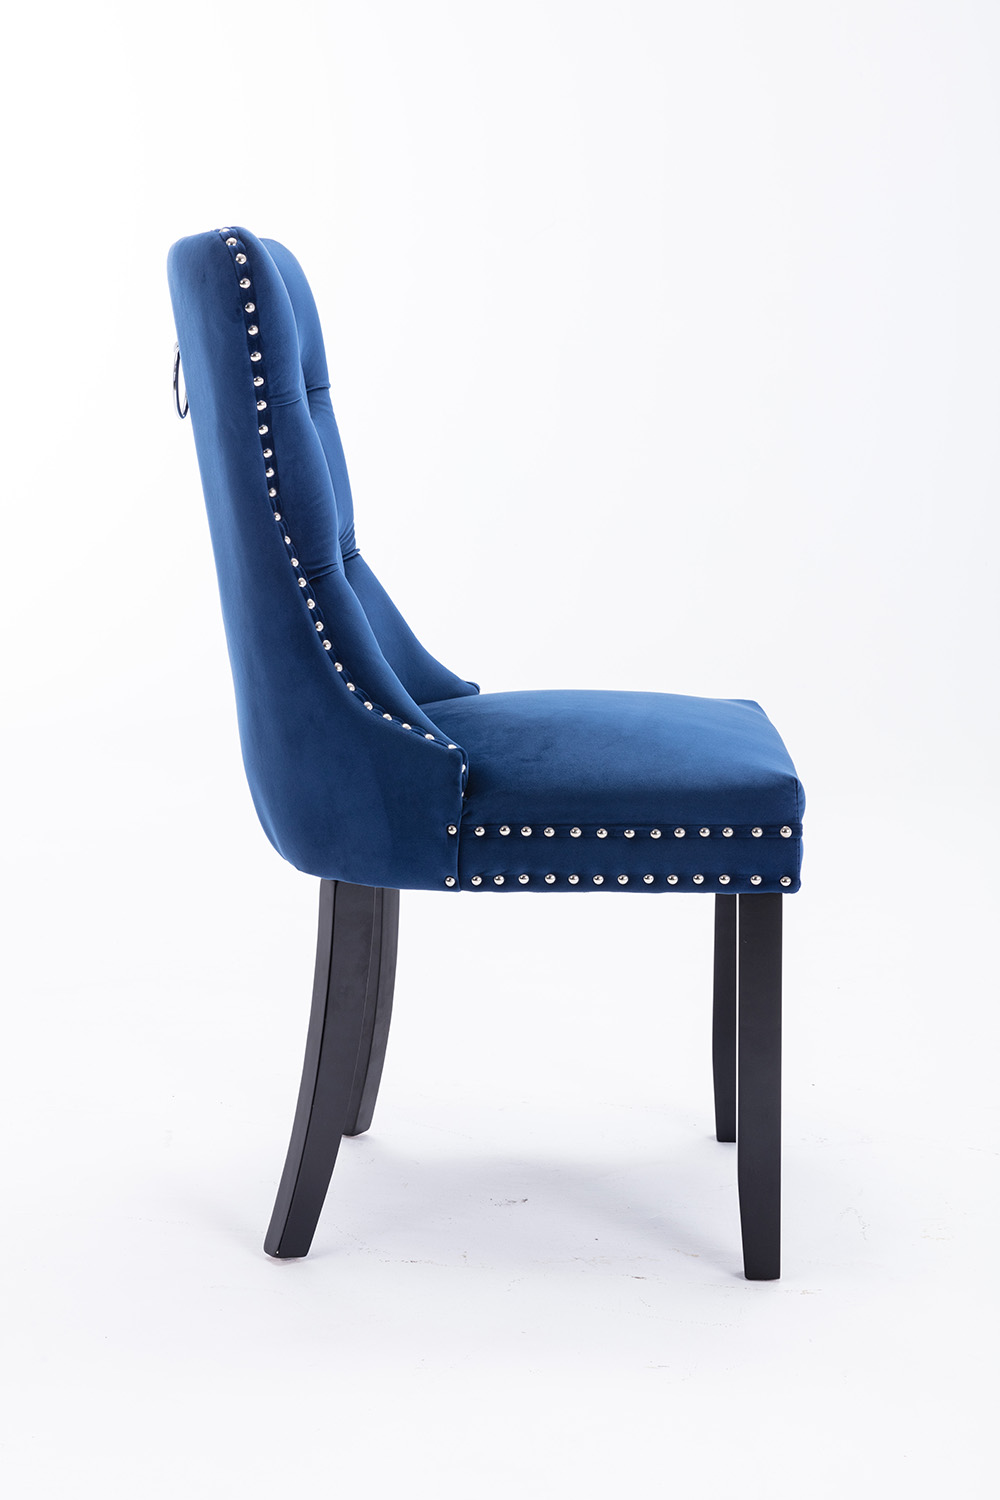 Velvet Upholstered Dining Chair Set of 2, with Curved Backrest, and Wooden Legs, for Restaurant, Cafe, Tavern, Office, Living Room - Blue